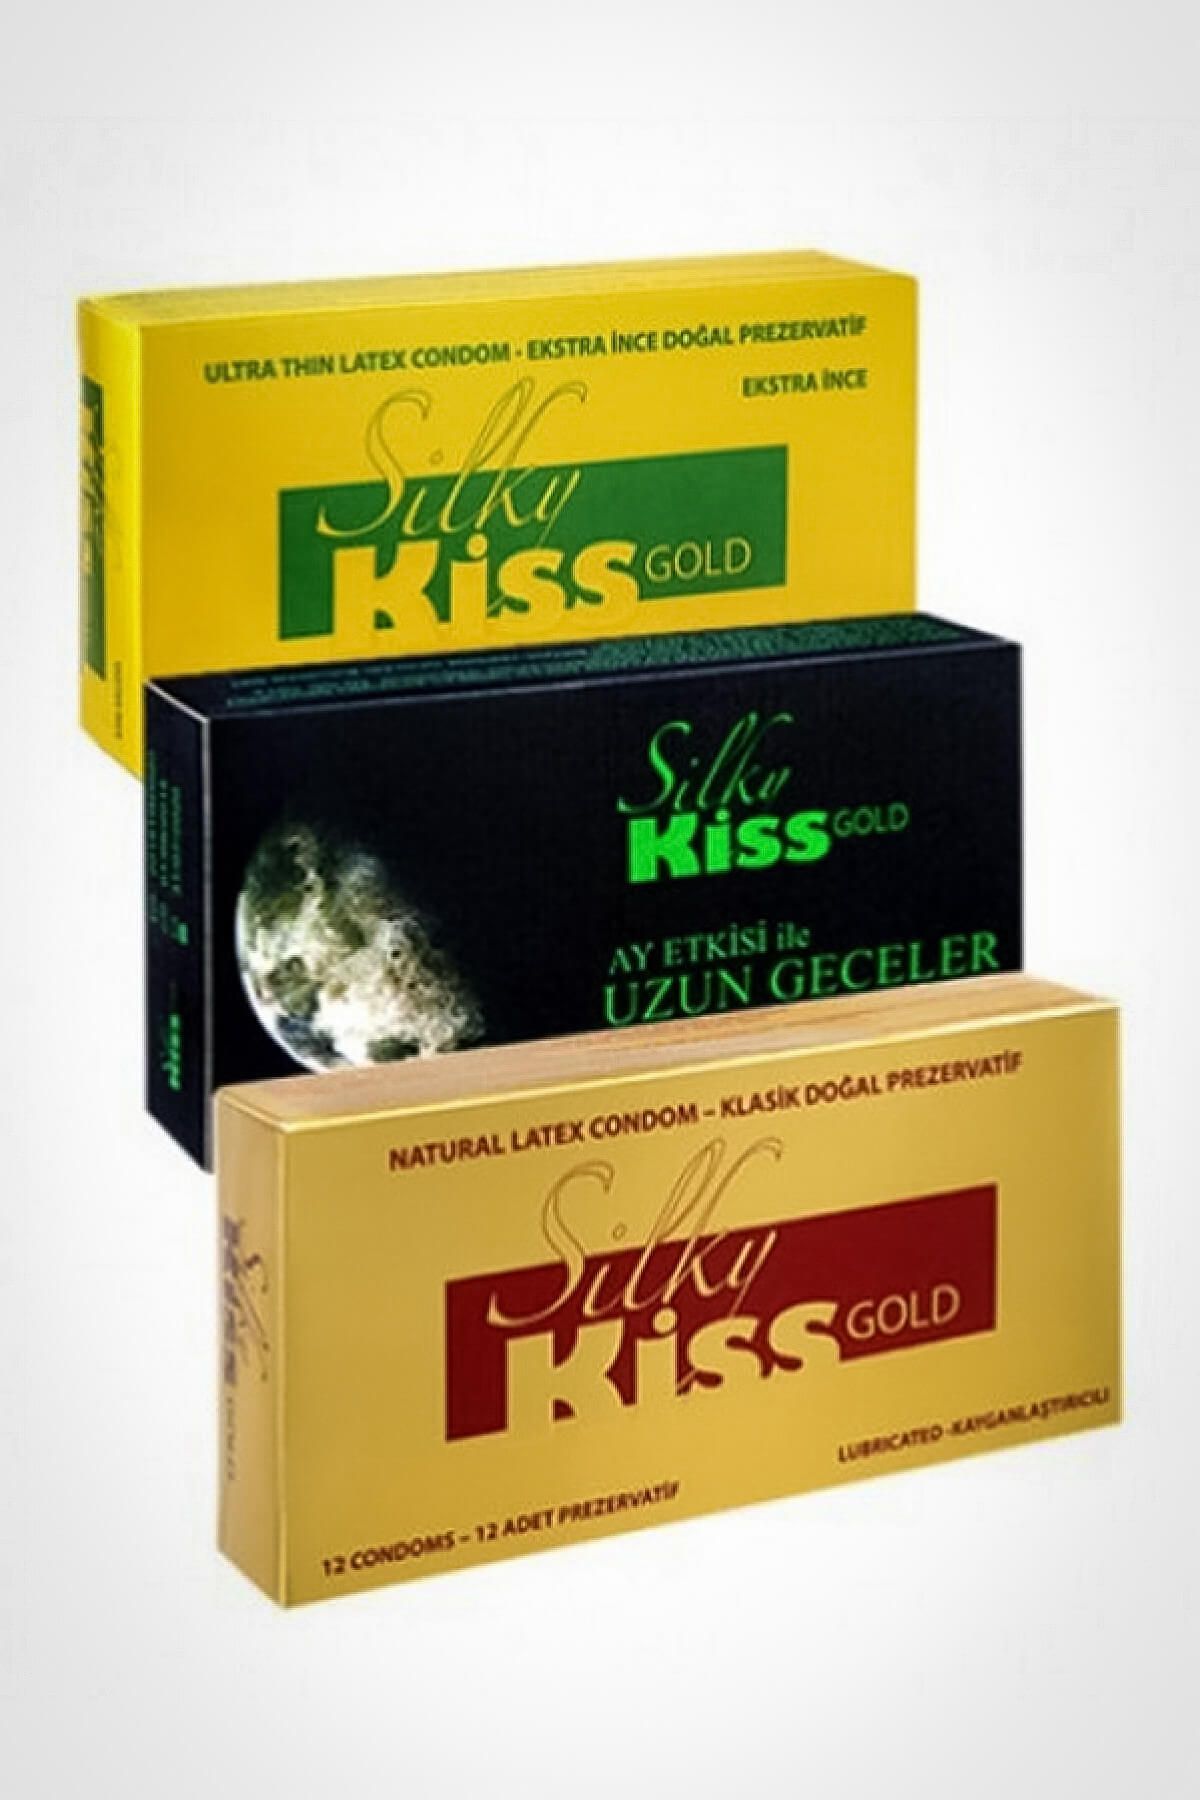 Silky Kiss Gold Prezervatif Karnaval 36 Adet Condom